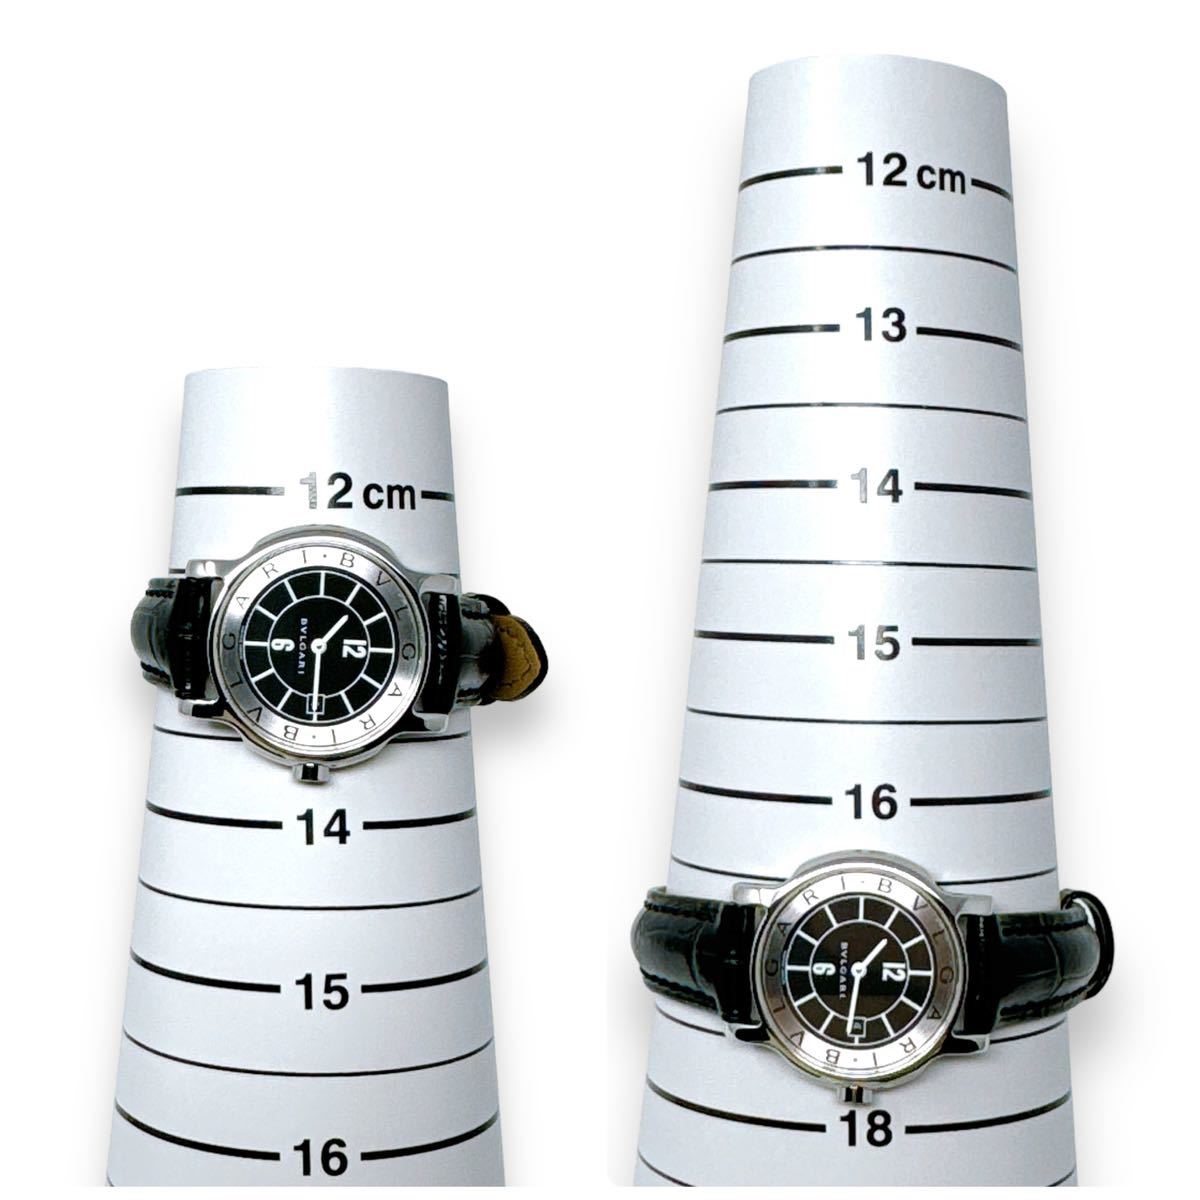  BVLGARY Solotempo ST29S кварц кожа ремень черный женский часы QZ чёрный циферблат раунд работа 